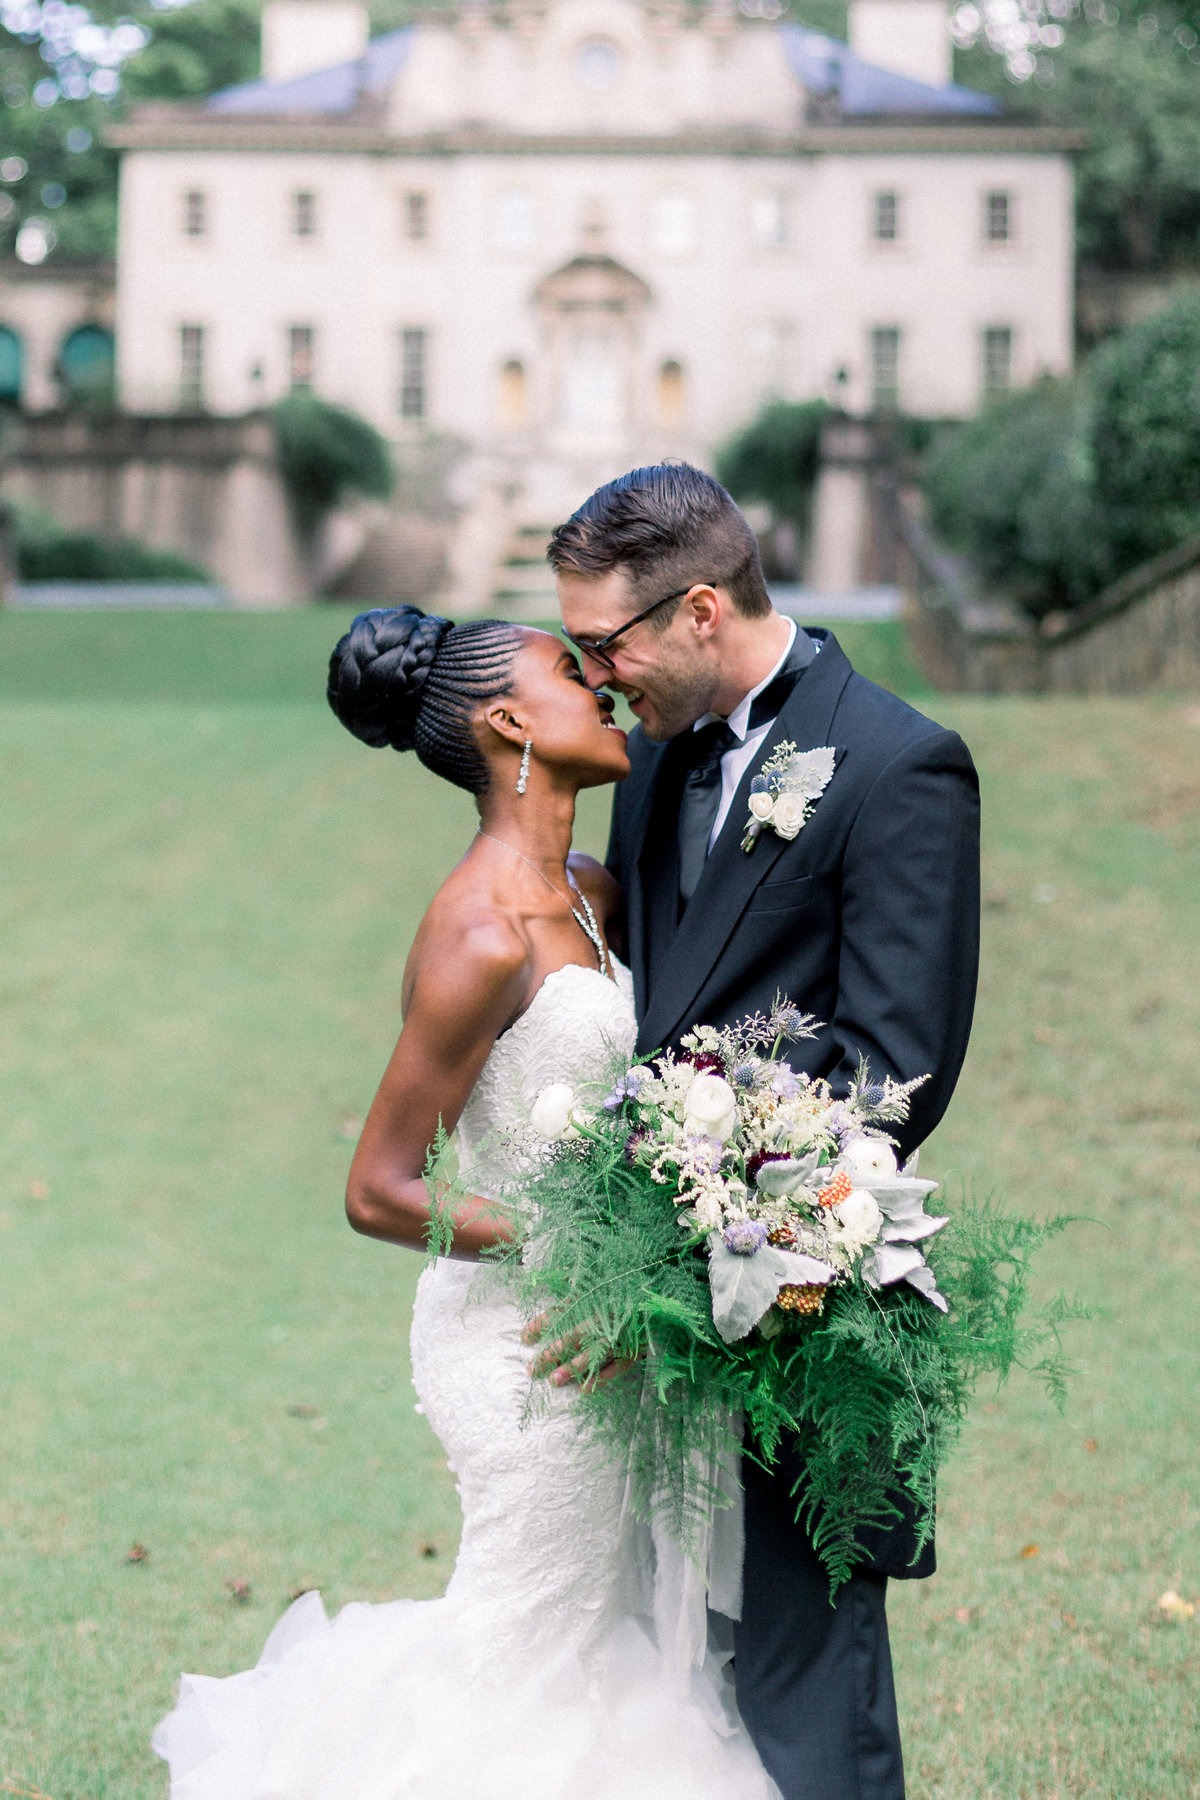 A joyful, romantic wedding at the Historic Swan House in Atlanta, Georgia.